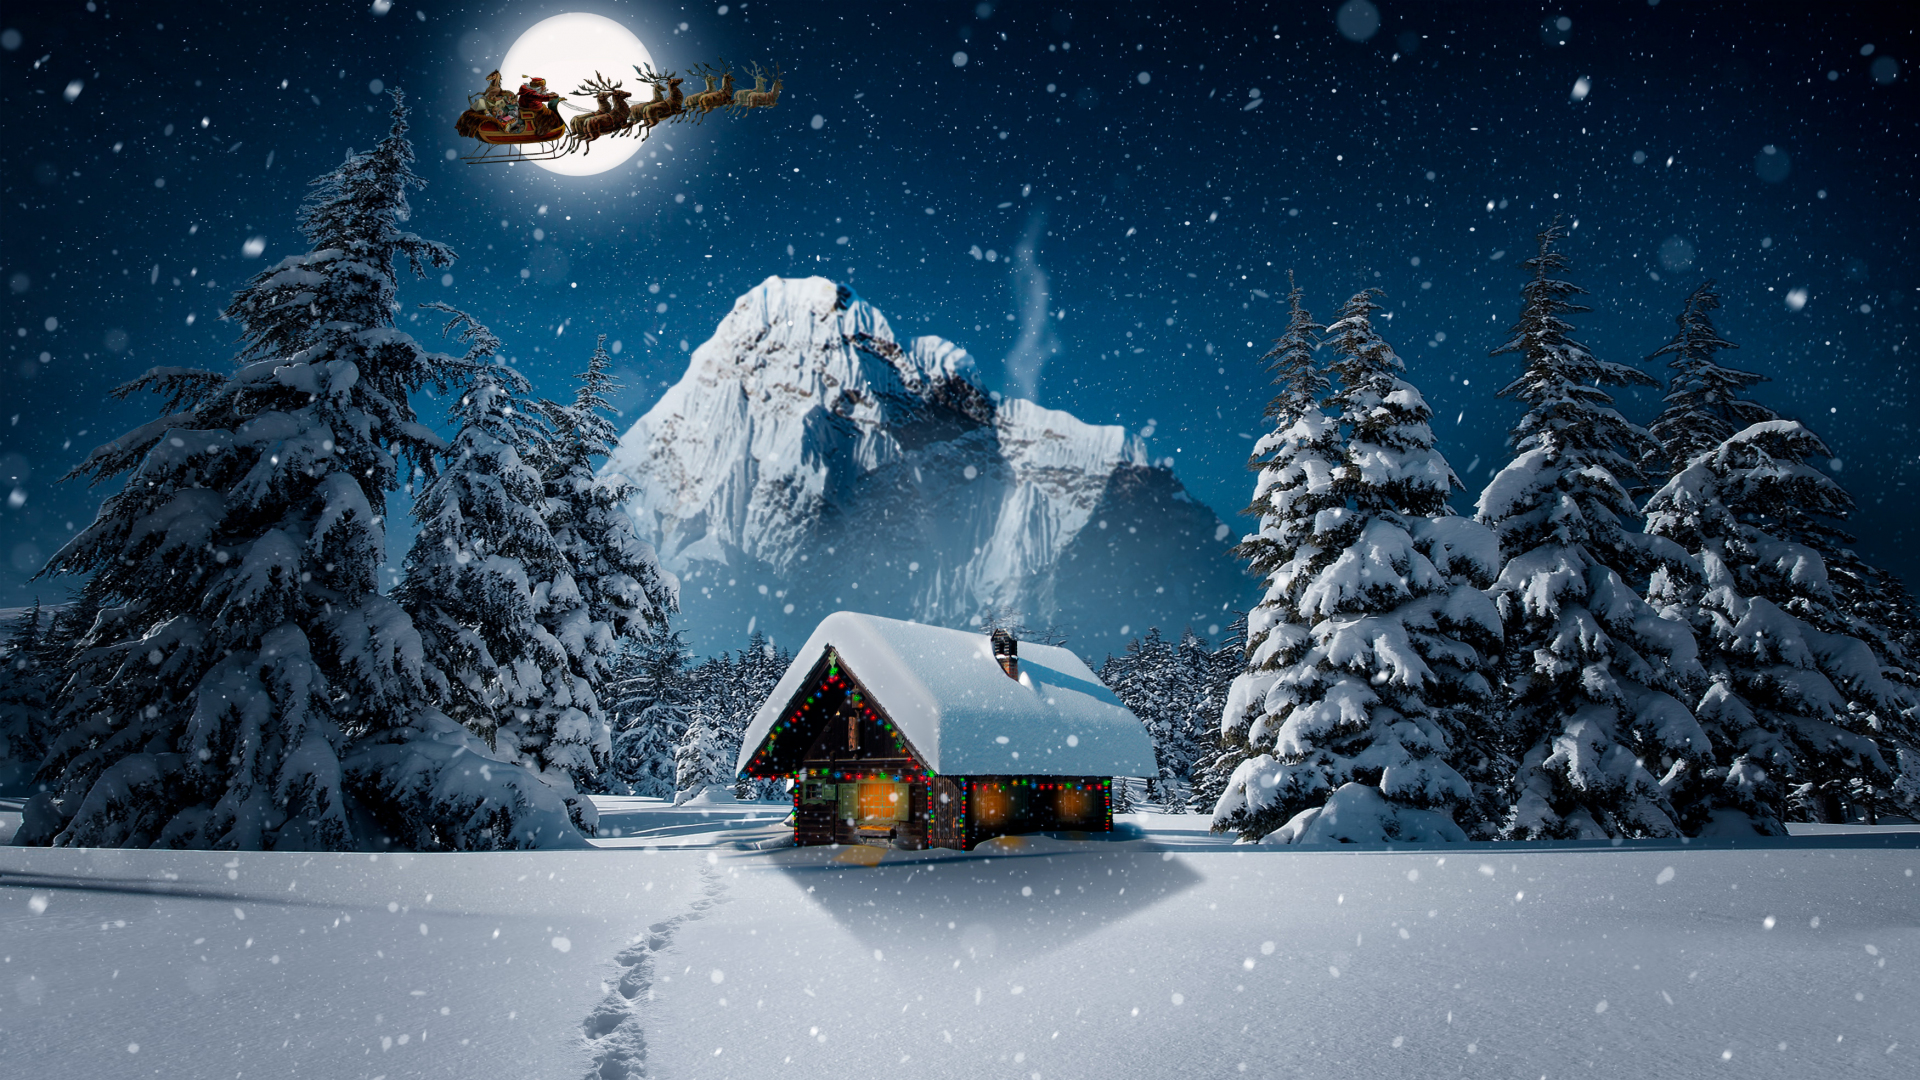 Download wallpaper 1920x1080 snowfall, winter, hut, house, winter ...